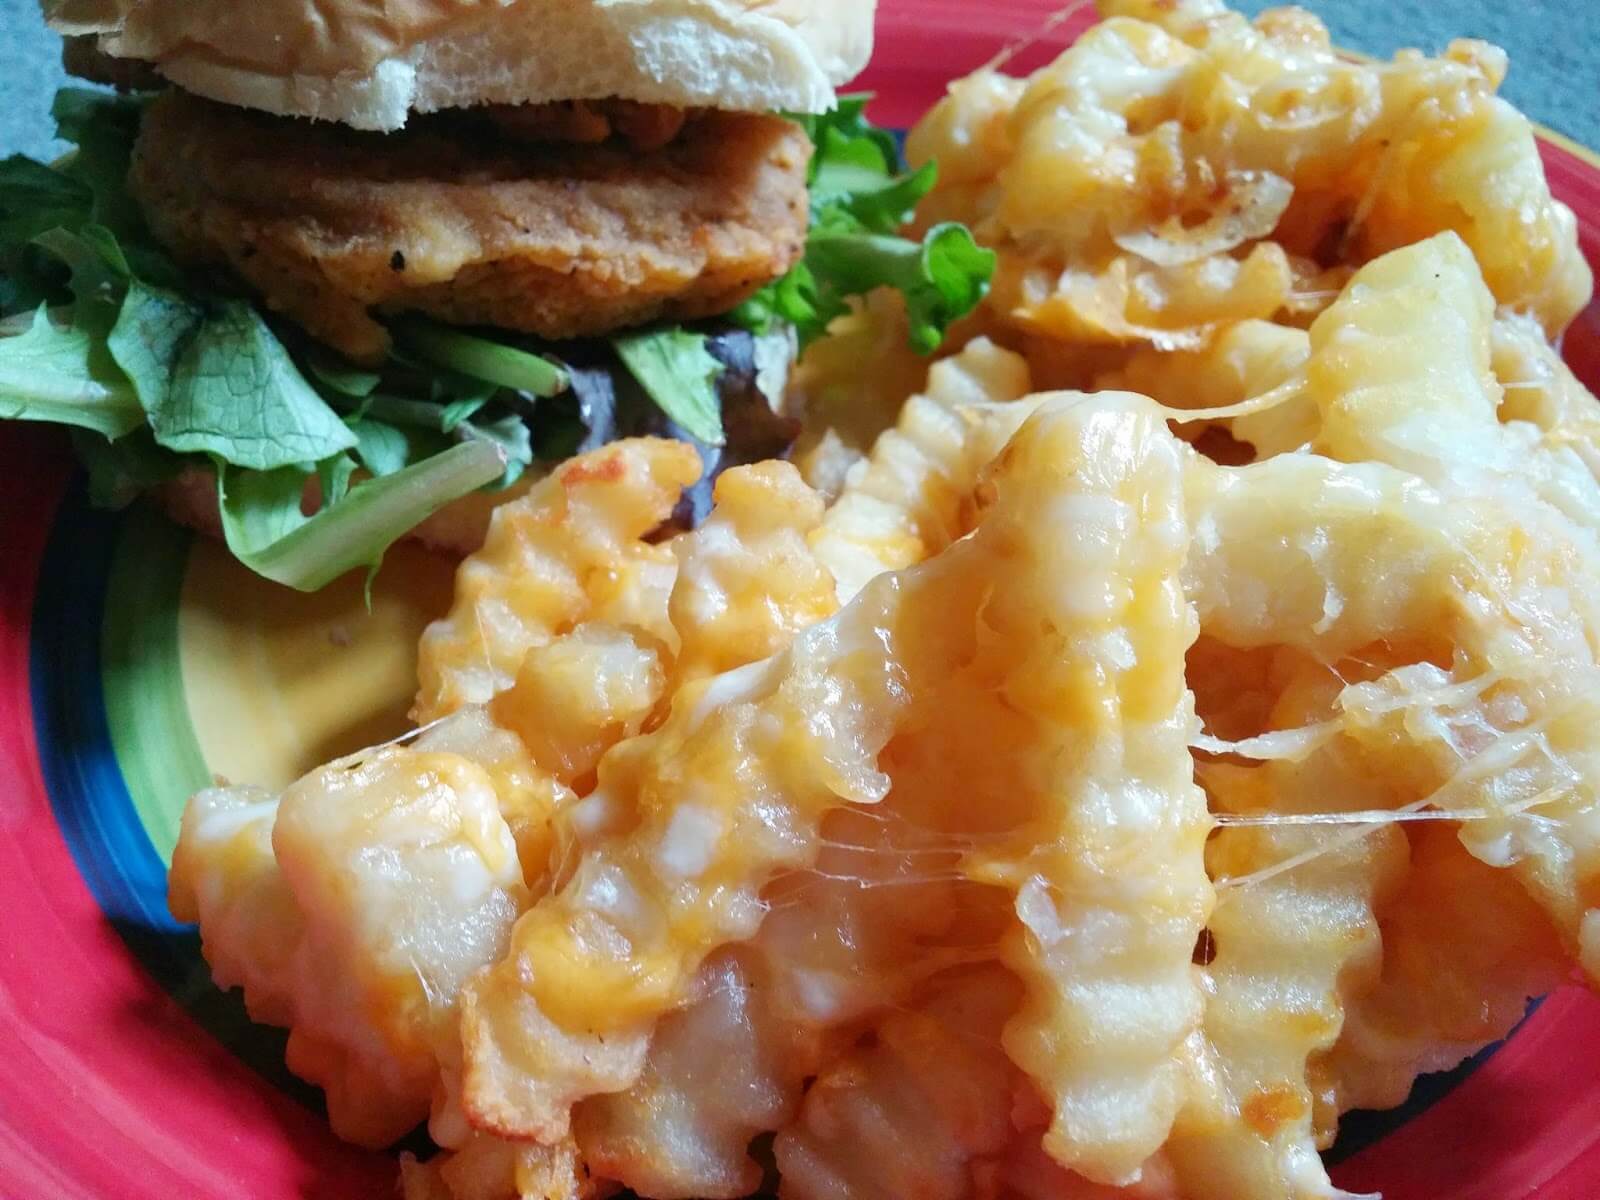 Patty & cheesy potato fries